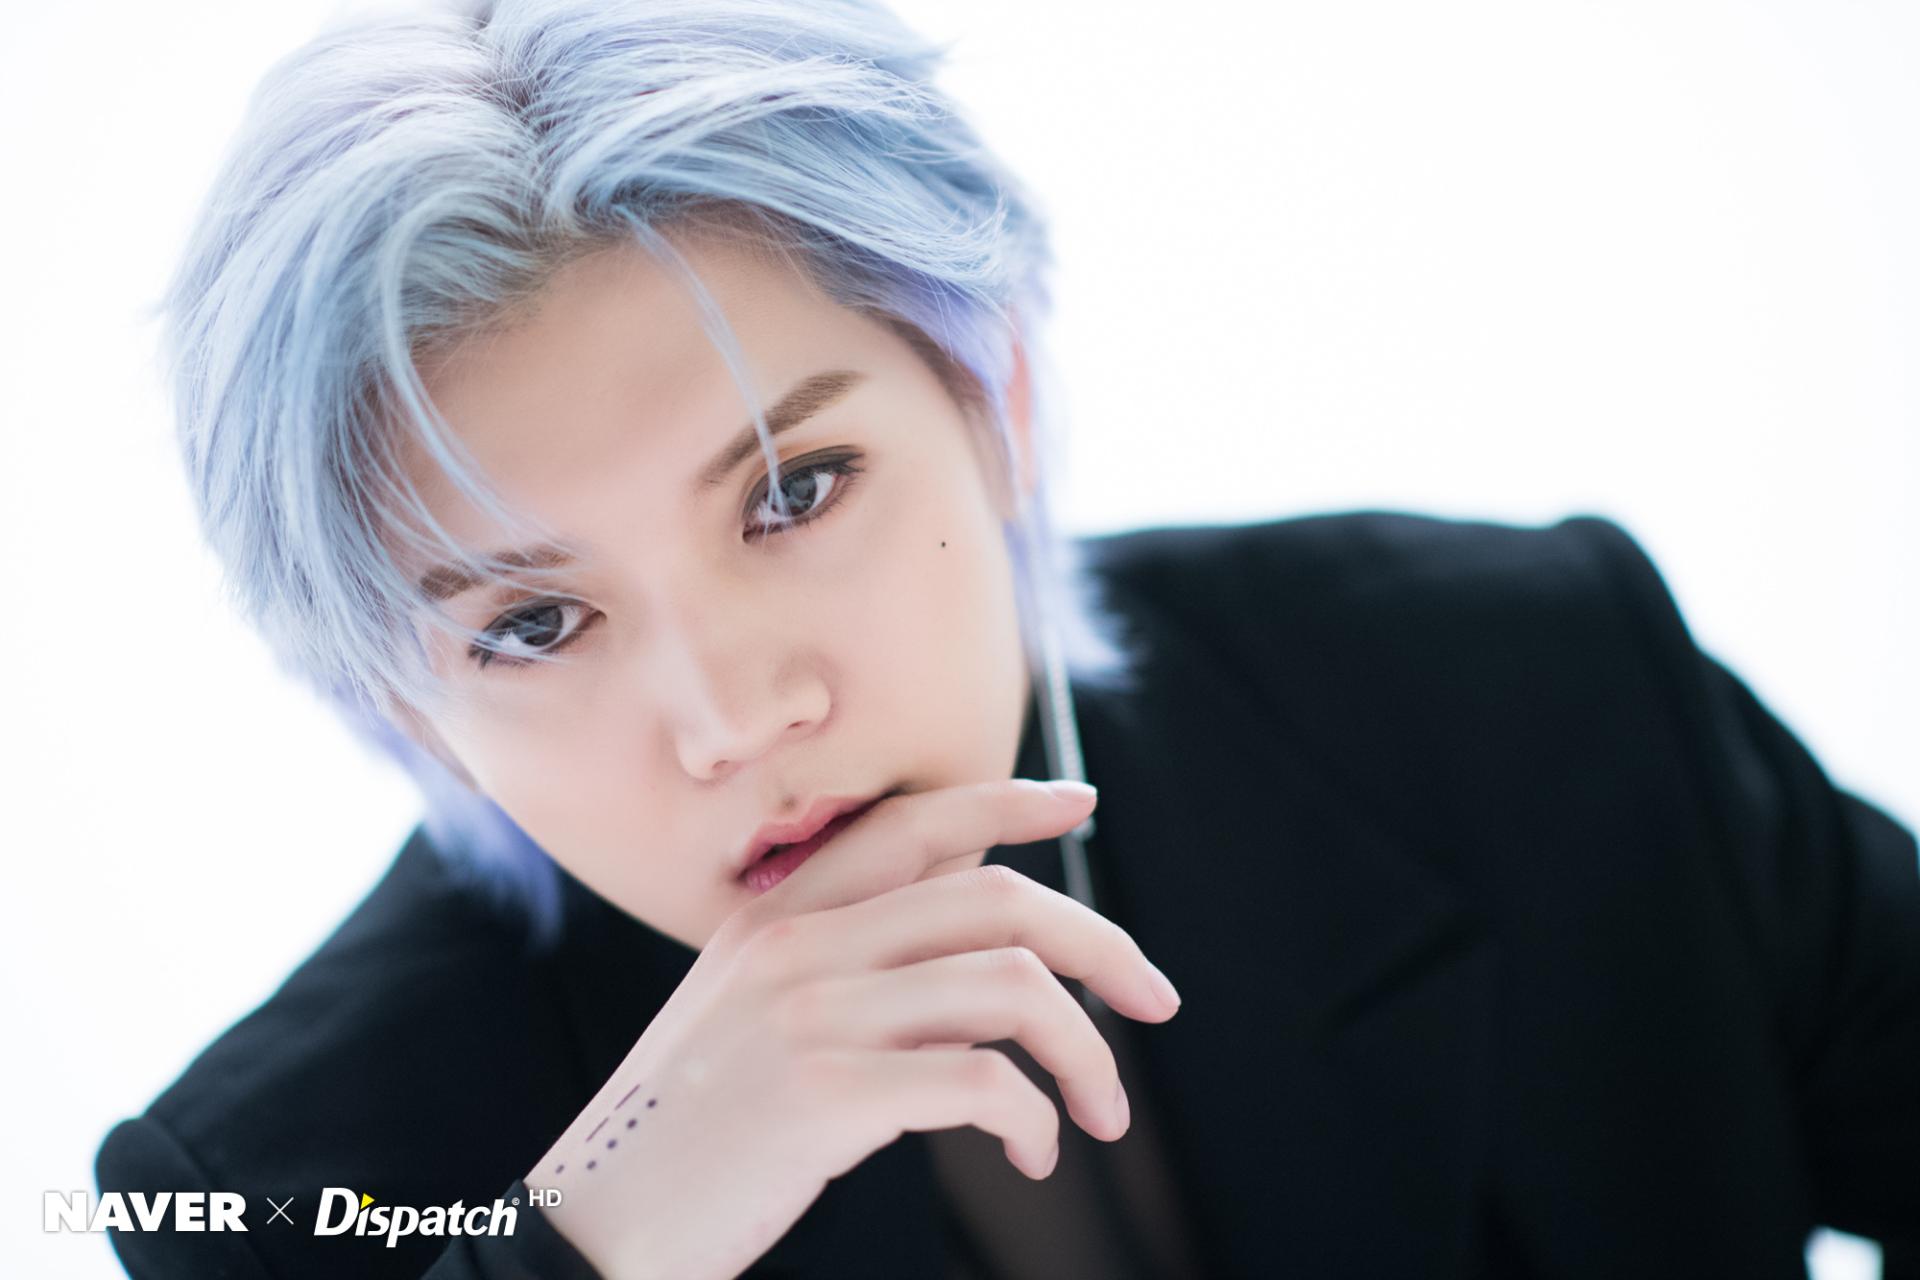 Ren's overwhelming charisma in light blue hair